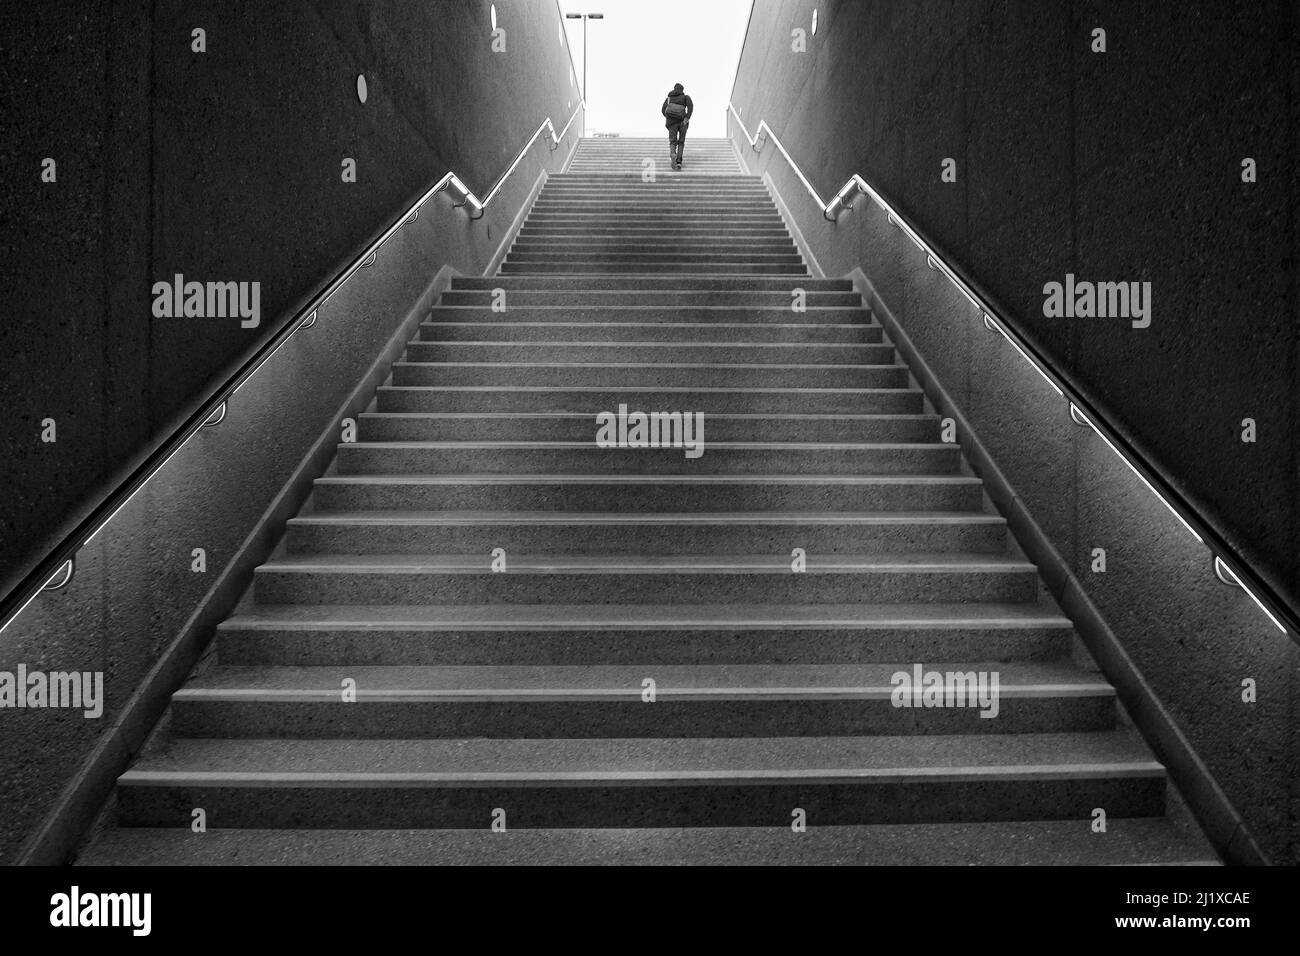 Man walking up dark stairs Stock Photo